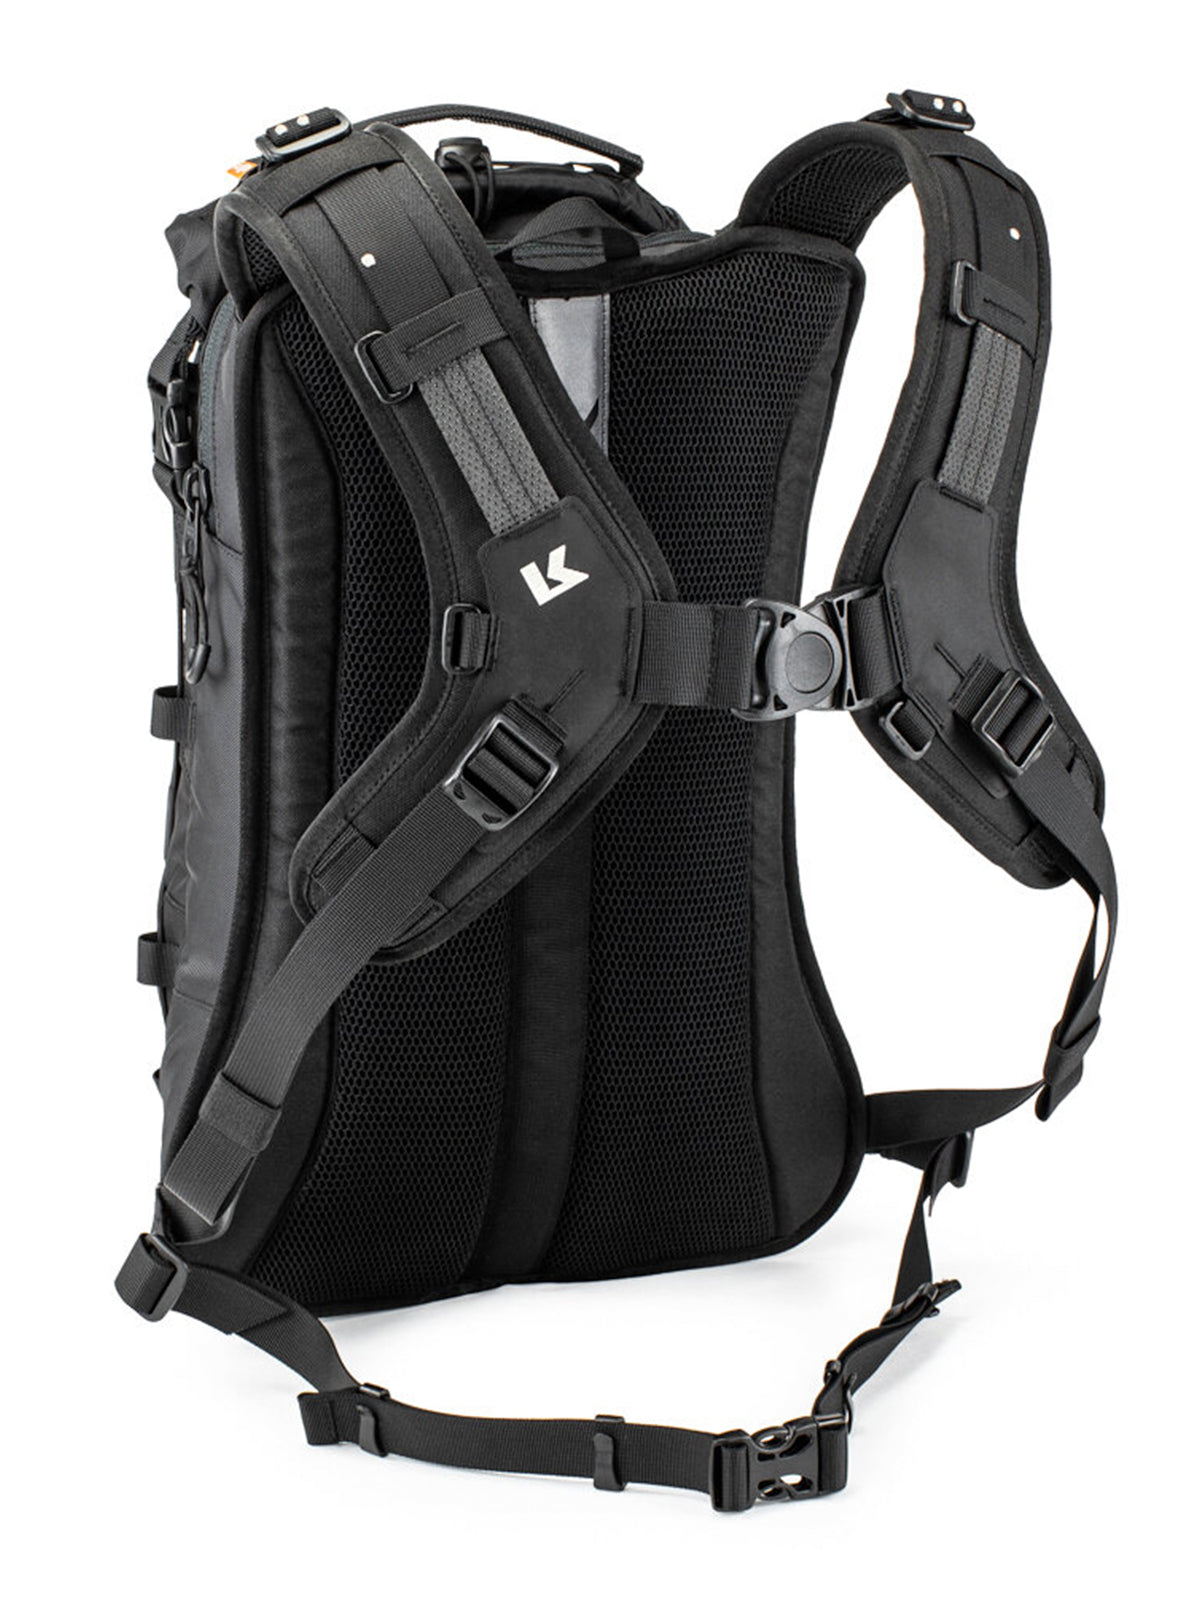 Kriega Trail18 Adventure Backpack harness